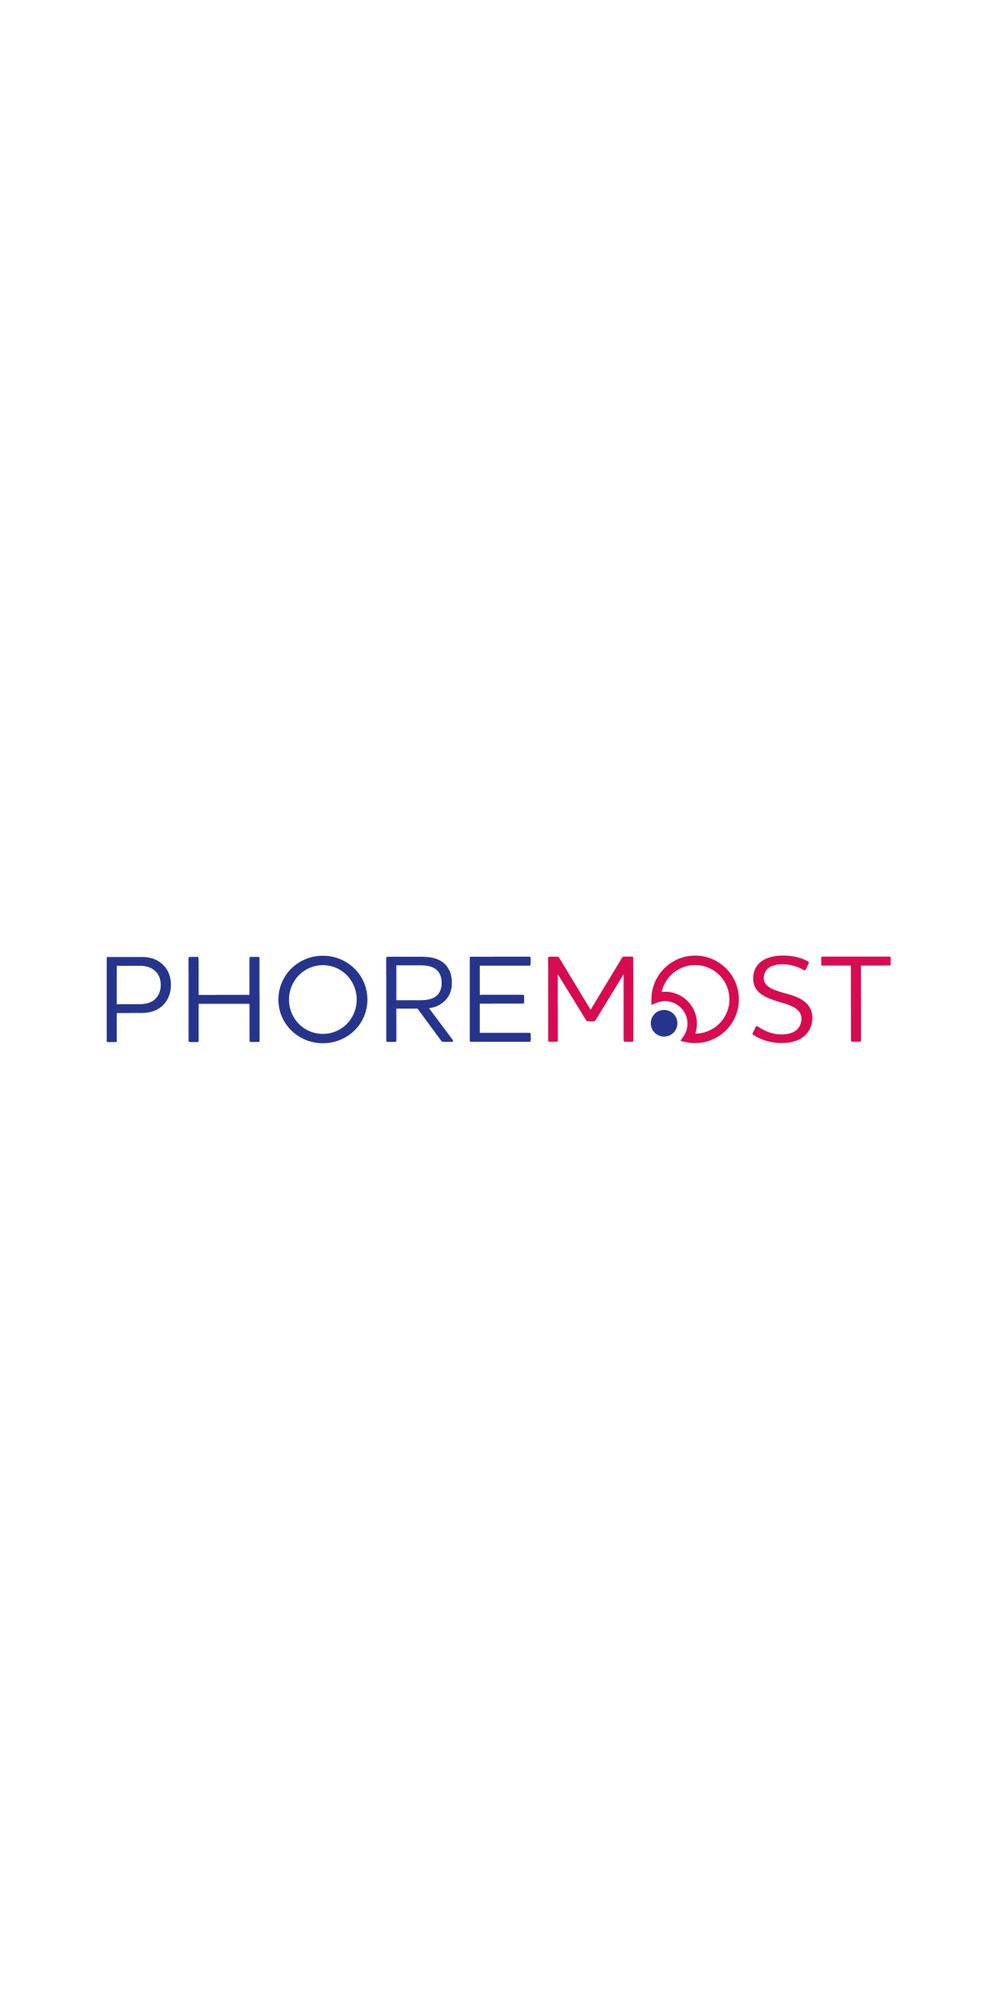 Phoremost logo